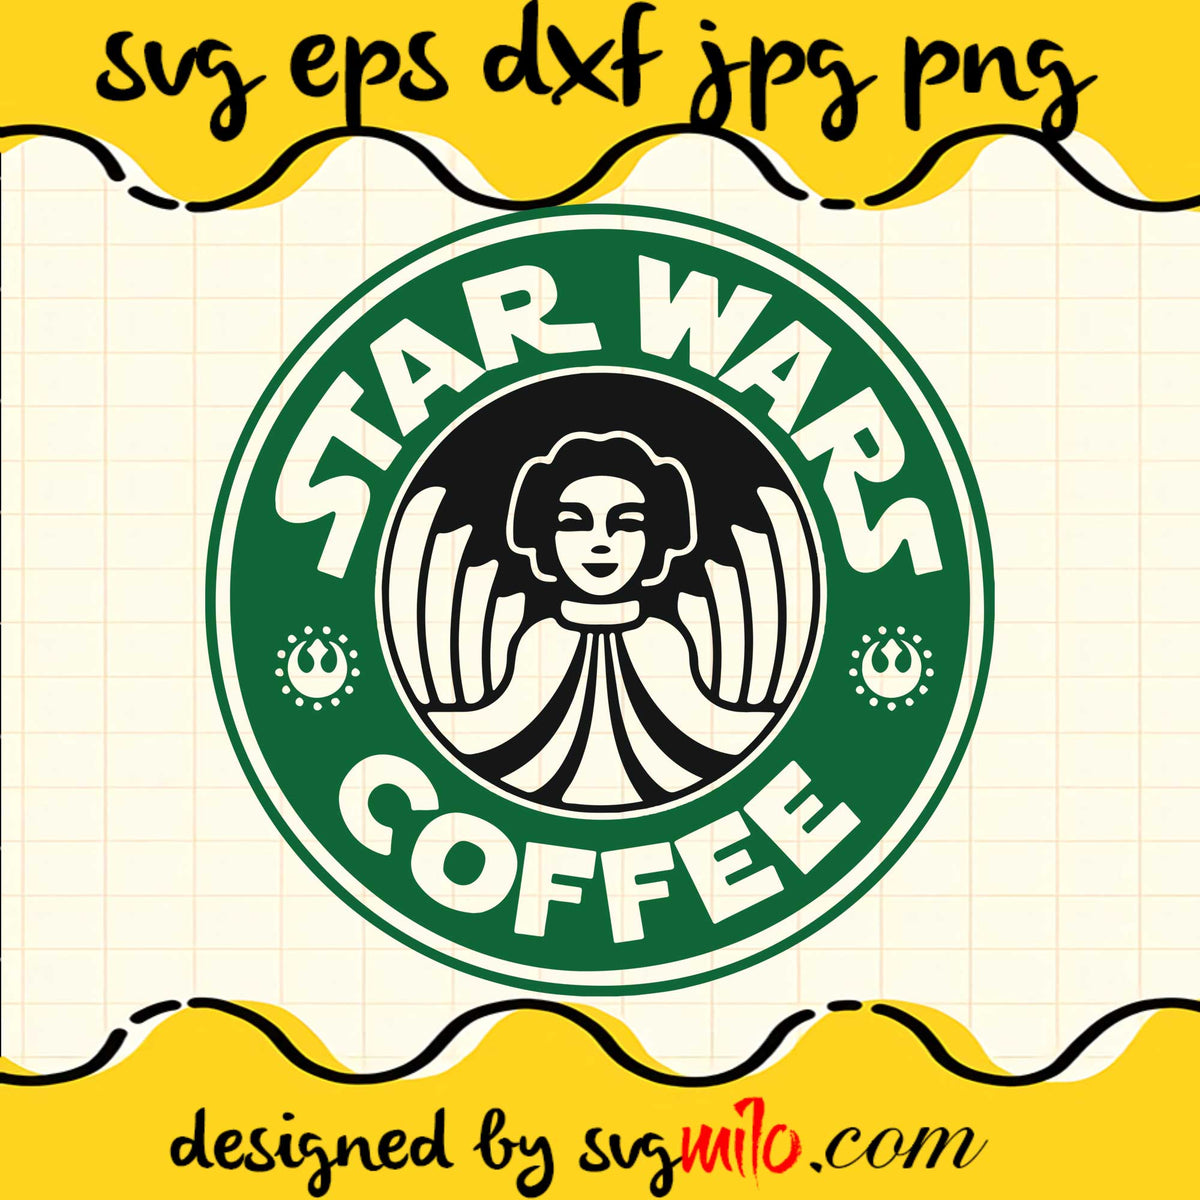 Star Wars Coffee Has A BIG ANNOUNCEMENT 